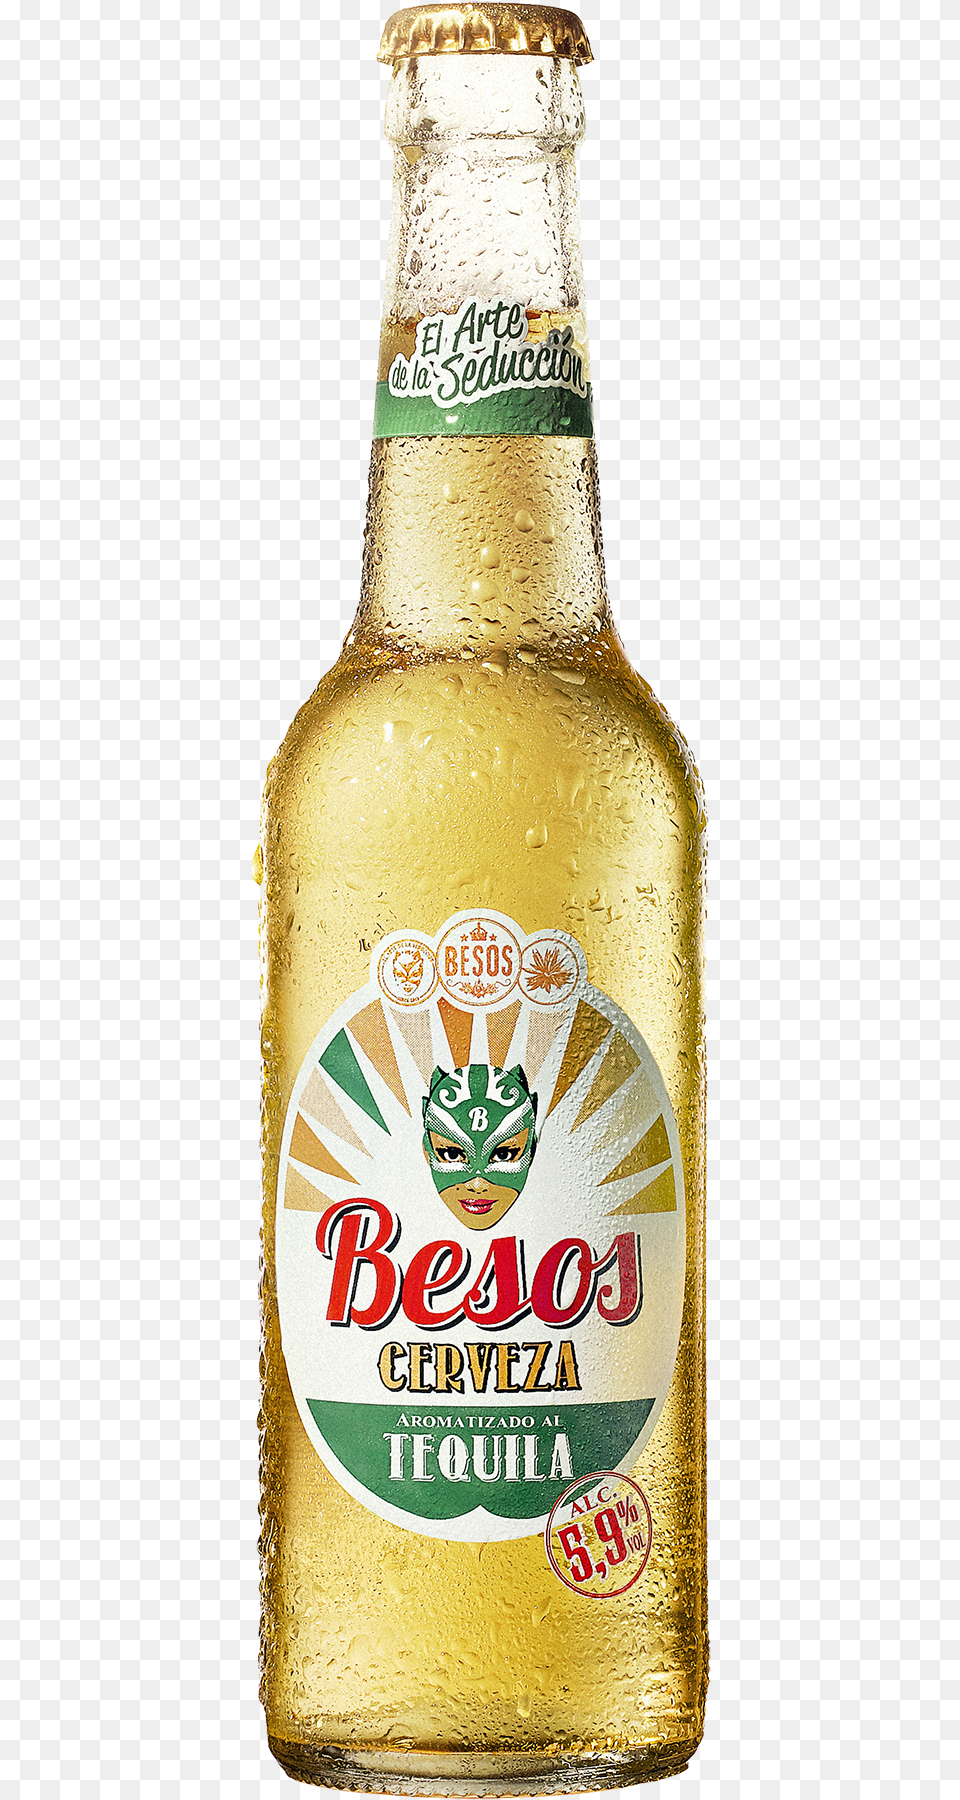 Besos Cerveza Download Besos Cerveza, Alcohol, Beer, Beer Bottle, Beverage Png Image